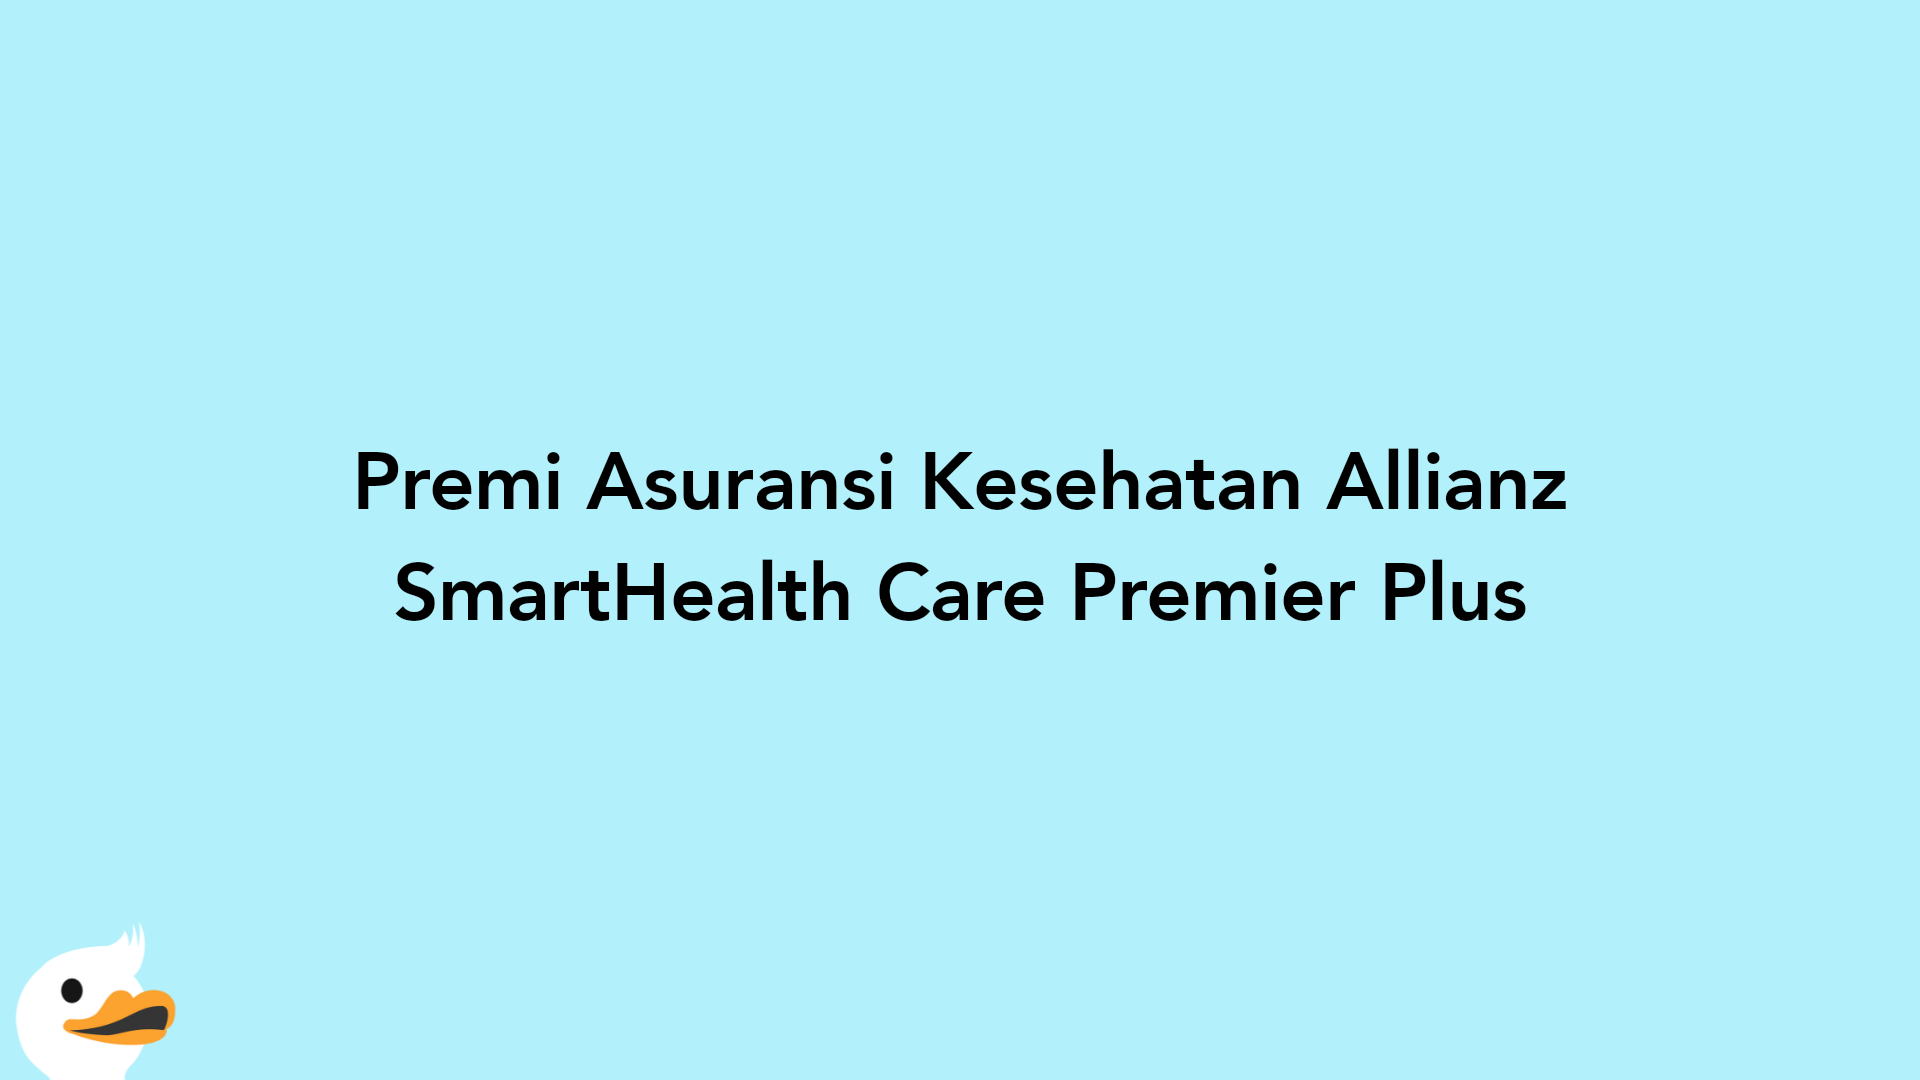 Premi Asuransi Kesehatan Allianz SmartHealth Care Premier Plus